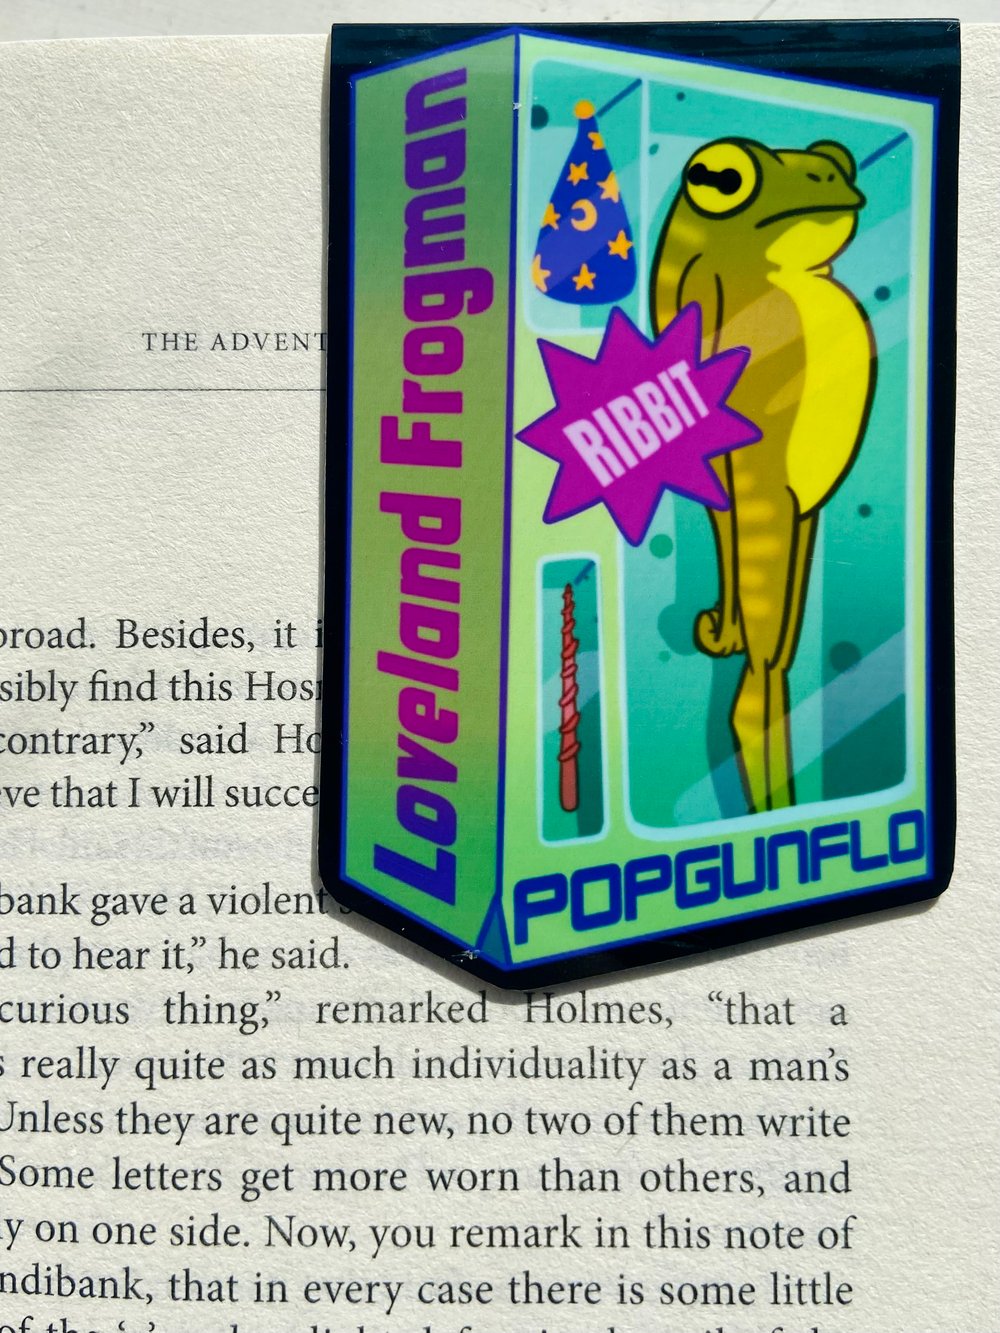 Loveland Frogman Magnetic Bookmark